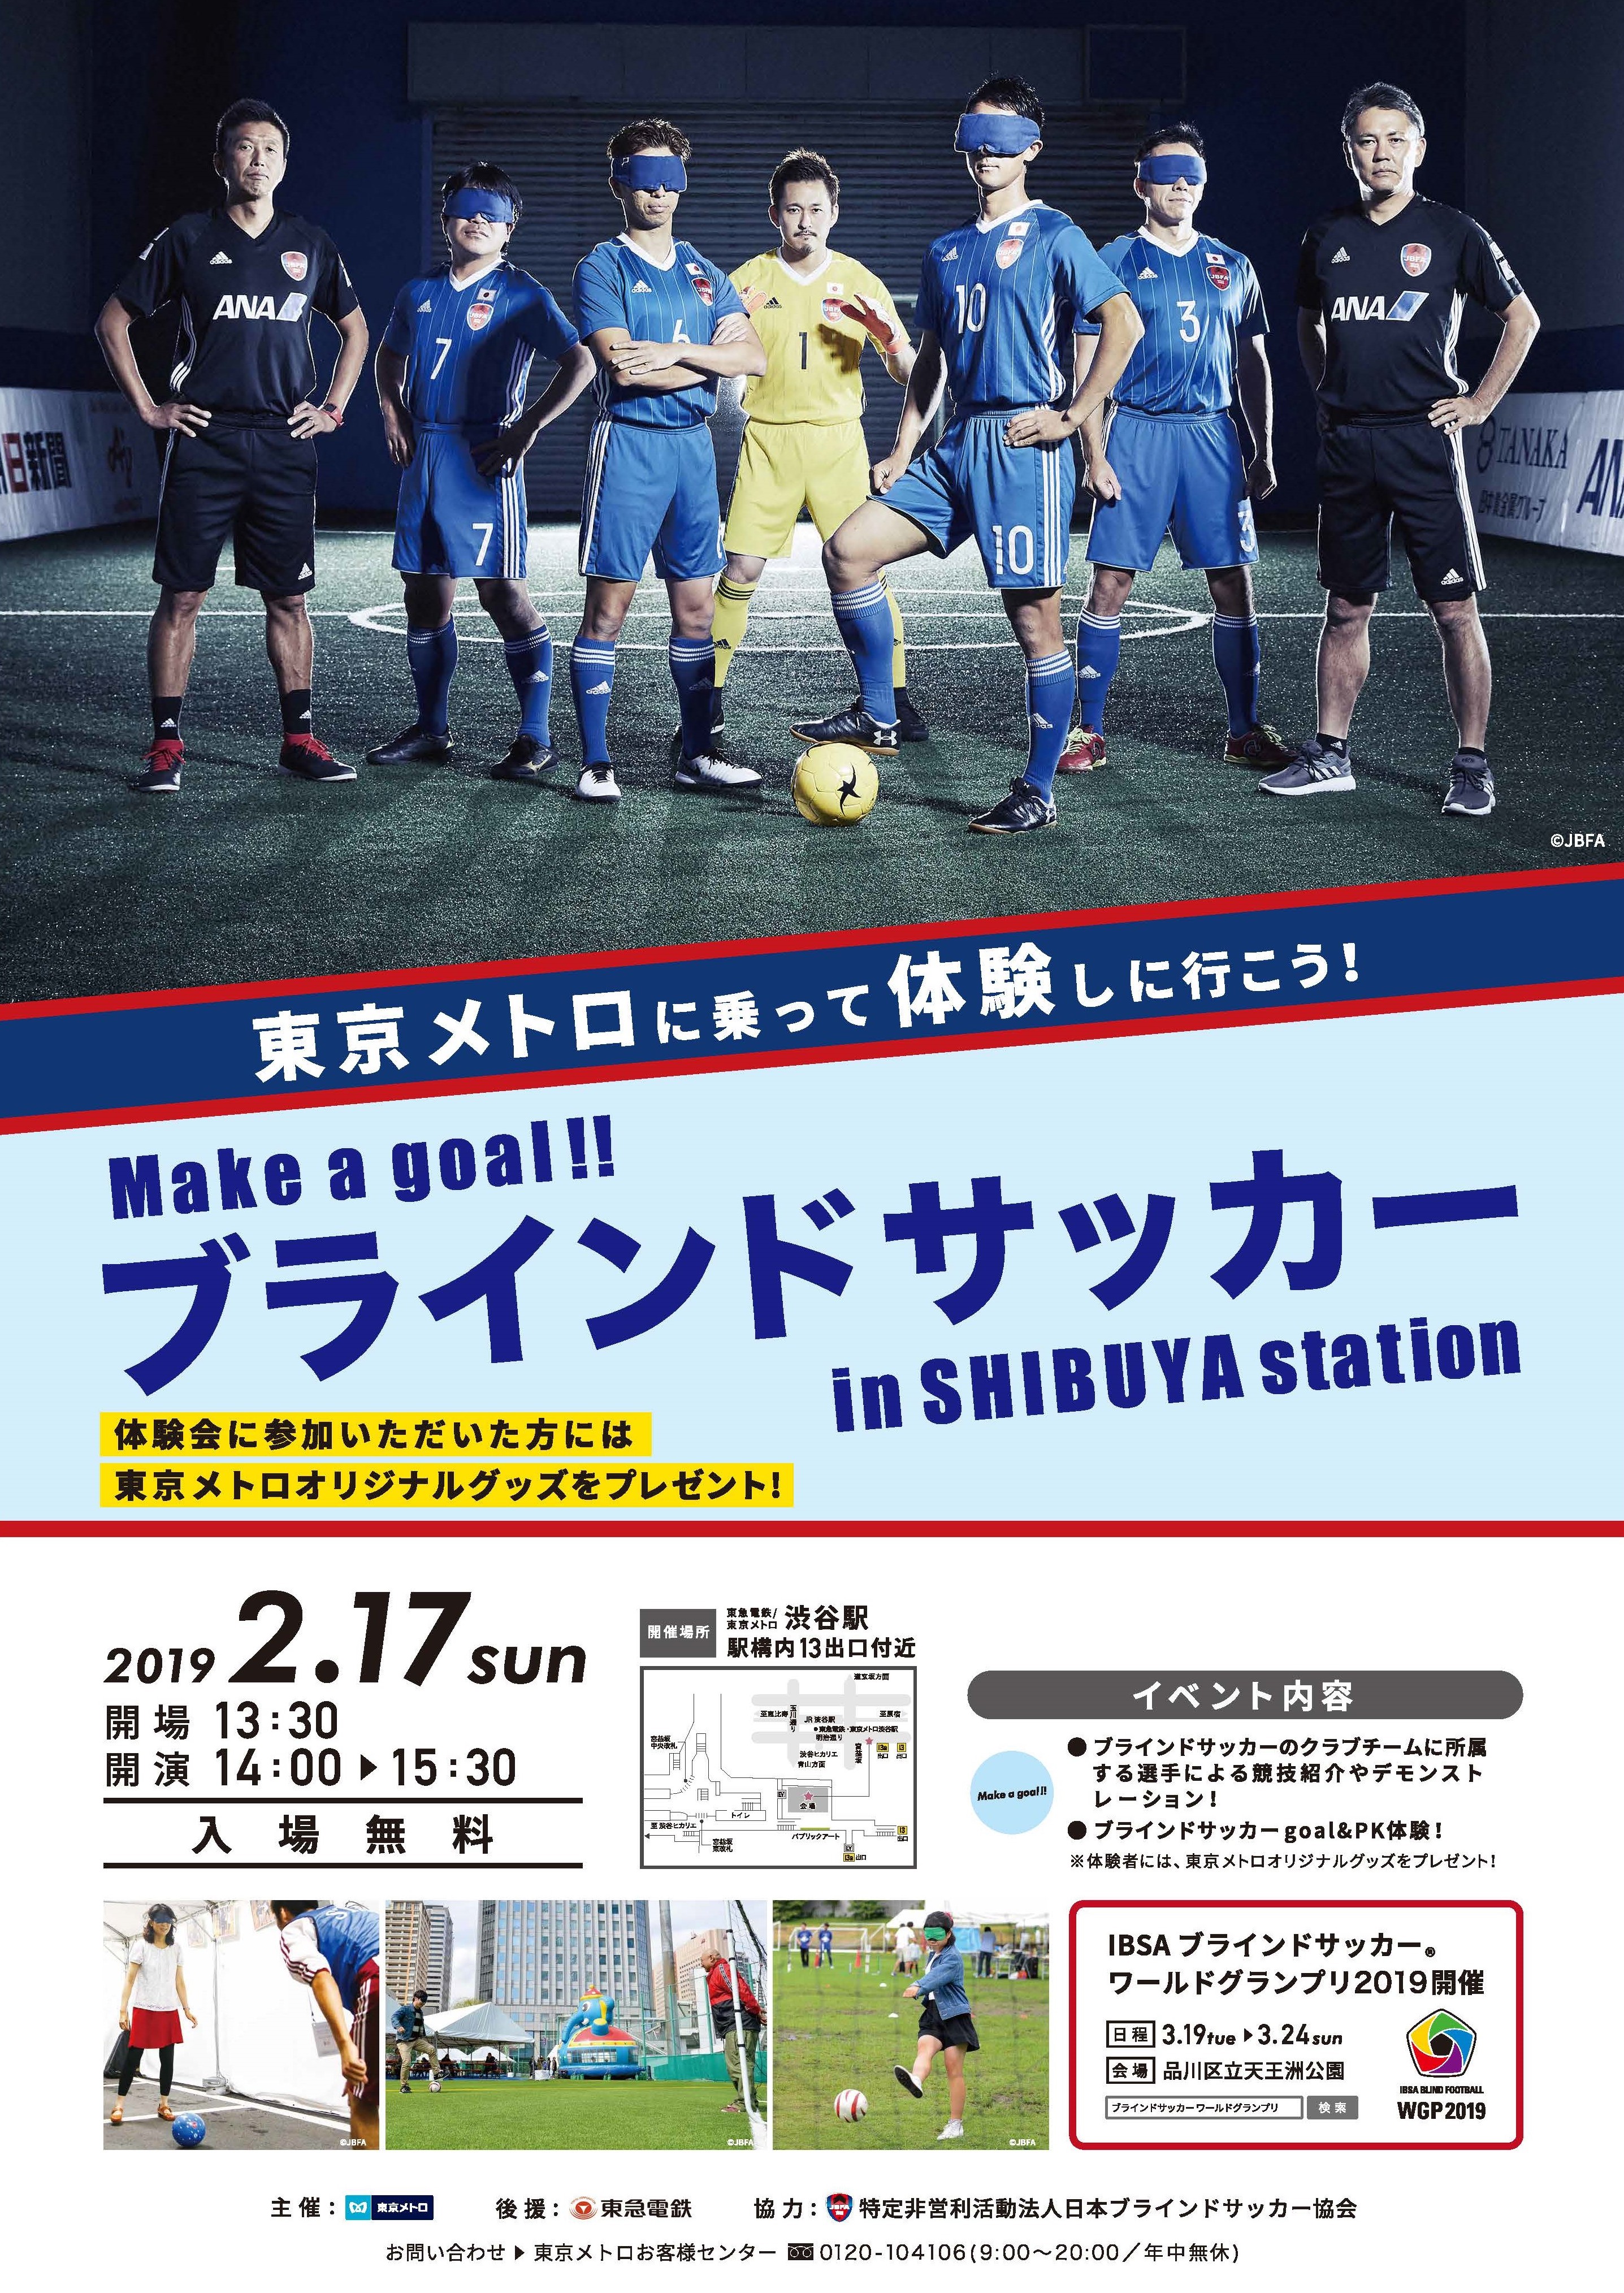 Make A Goal ブラインドサッカー In Shibuya Stationを開催します 東京メトロのプレスリリース